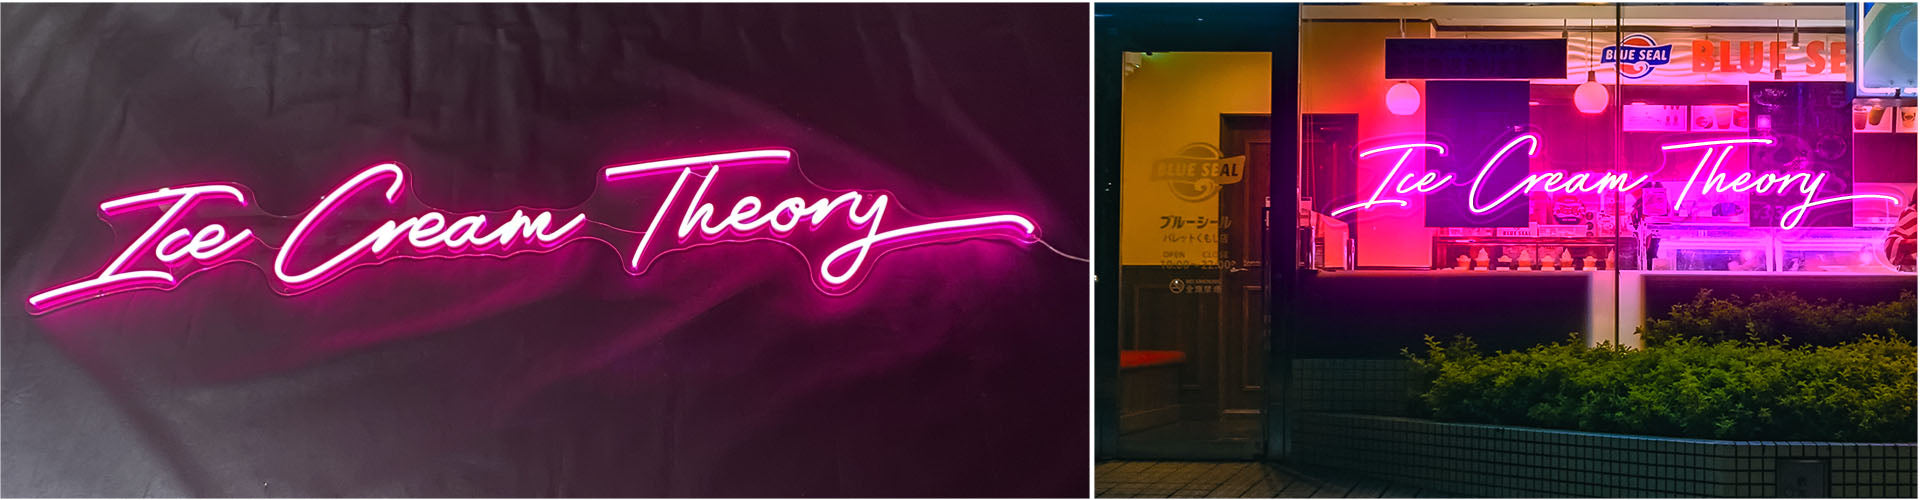 Ice Cream Theory Neon Wall Art Business Neon Light Sign